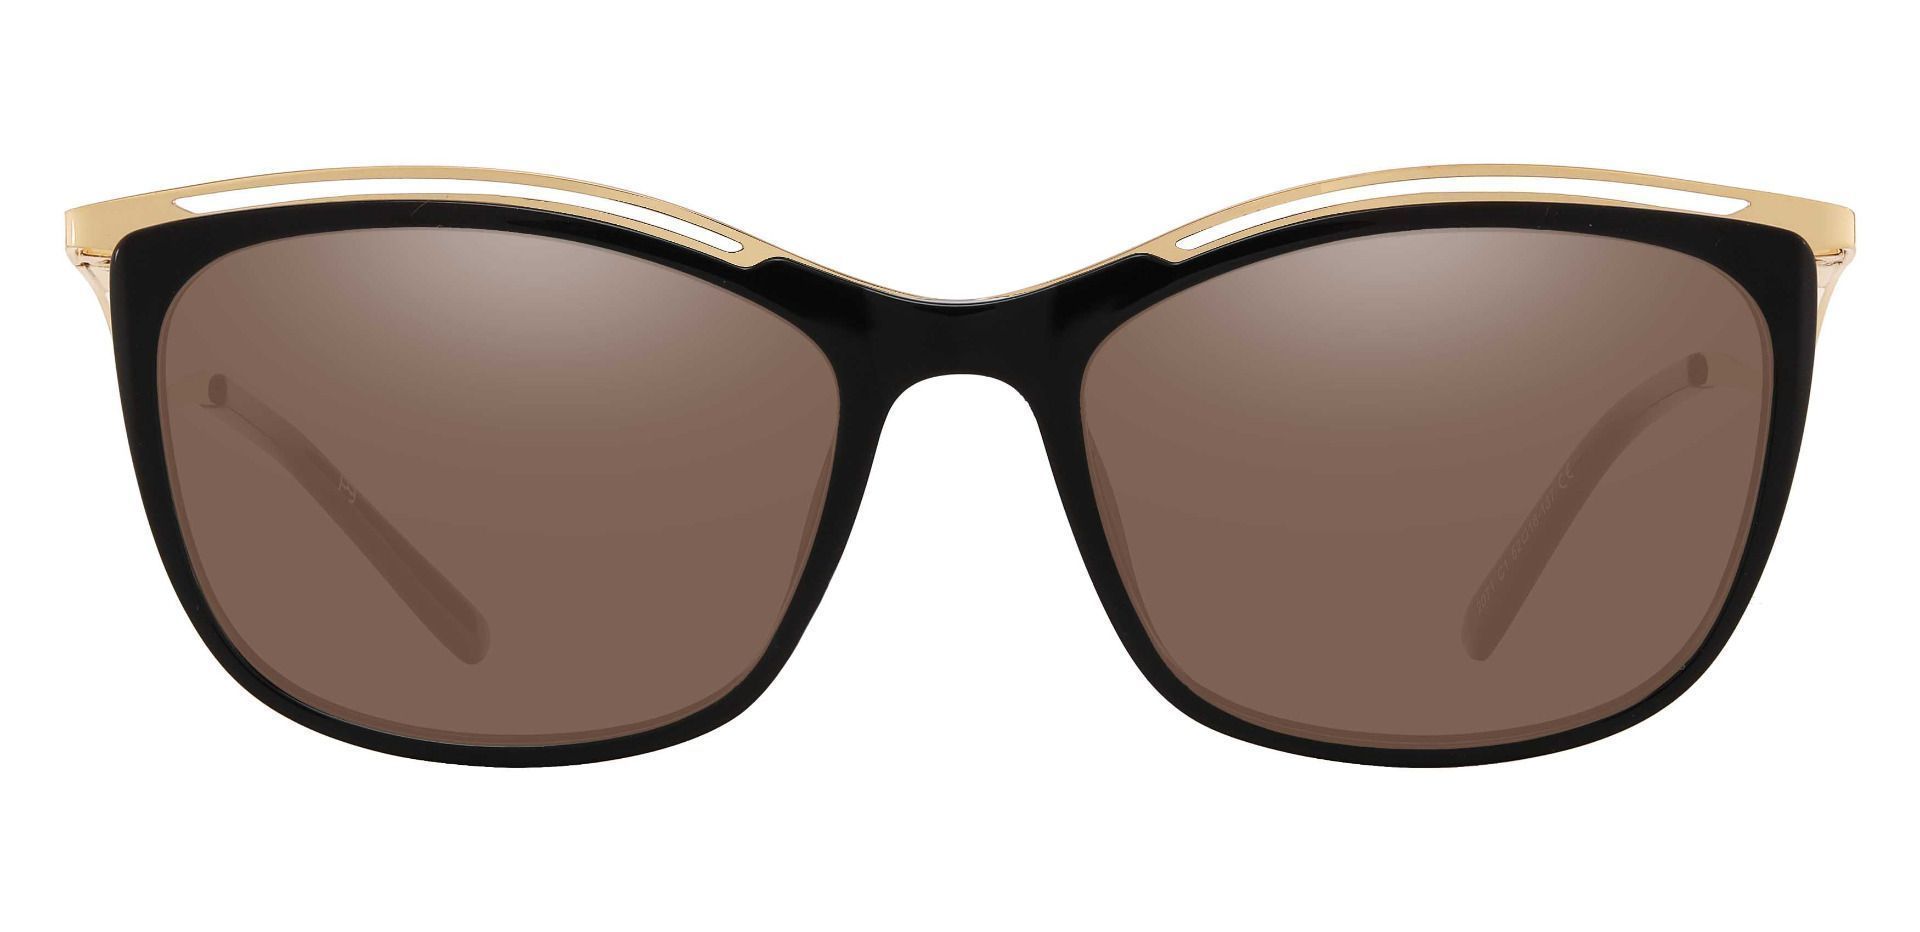 Enola Cat Eye Lined Bifocal Sunglasses - Black Frame With Brown Lenses